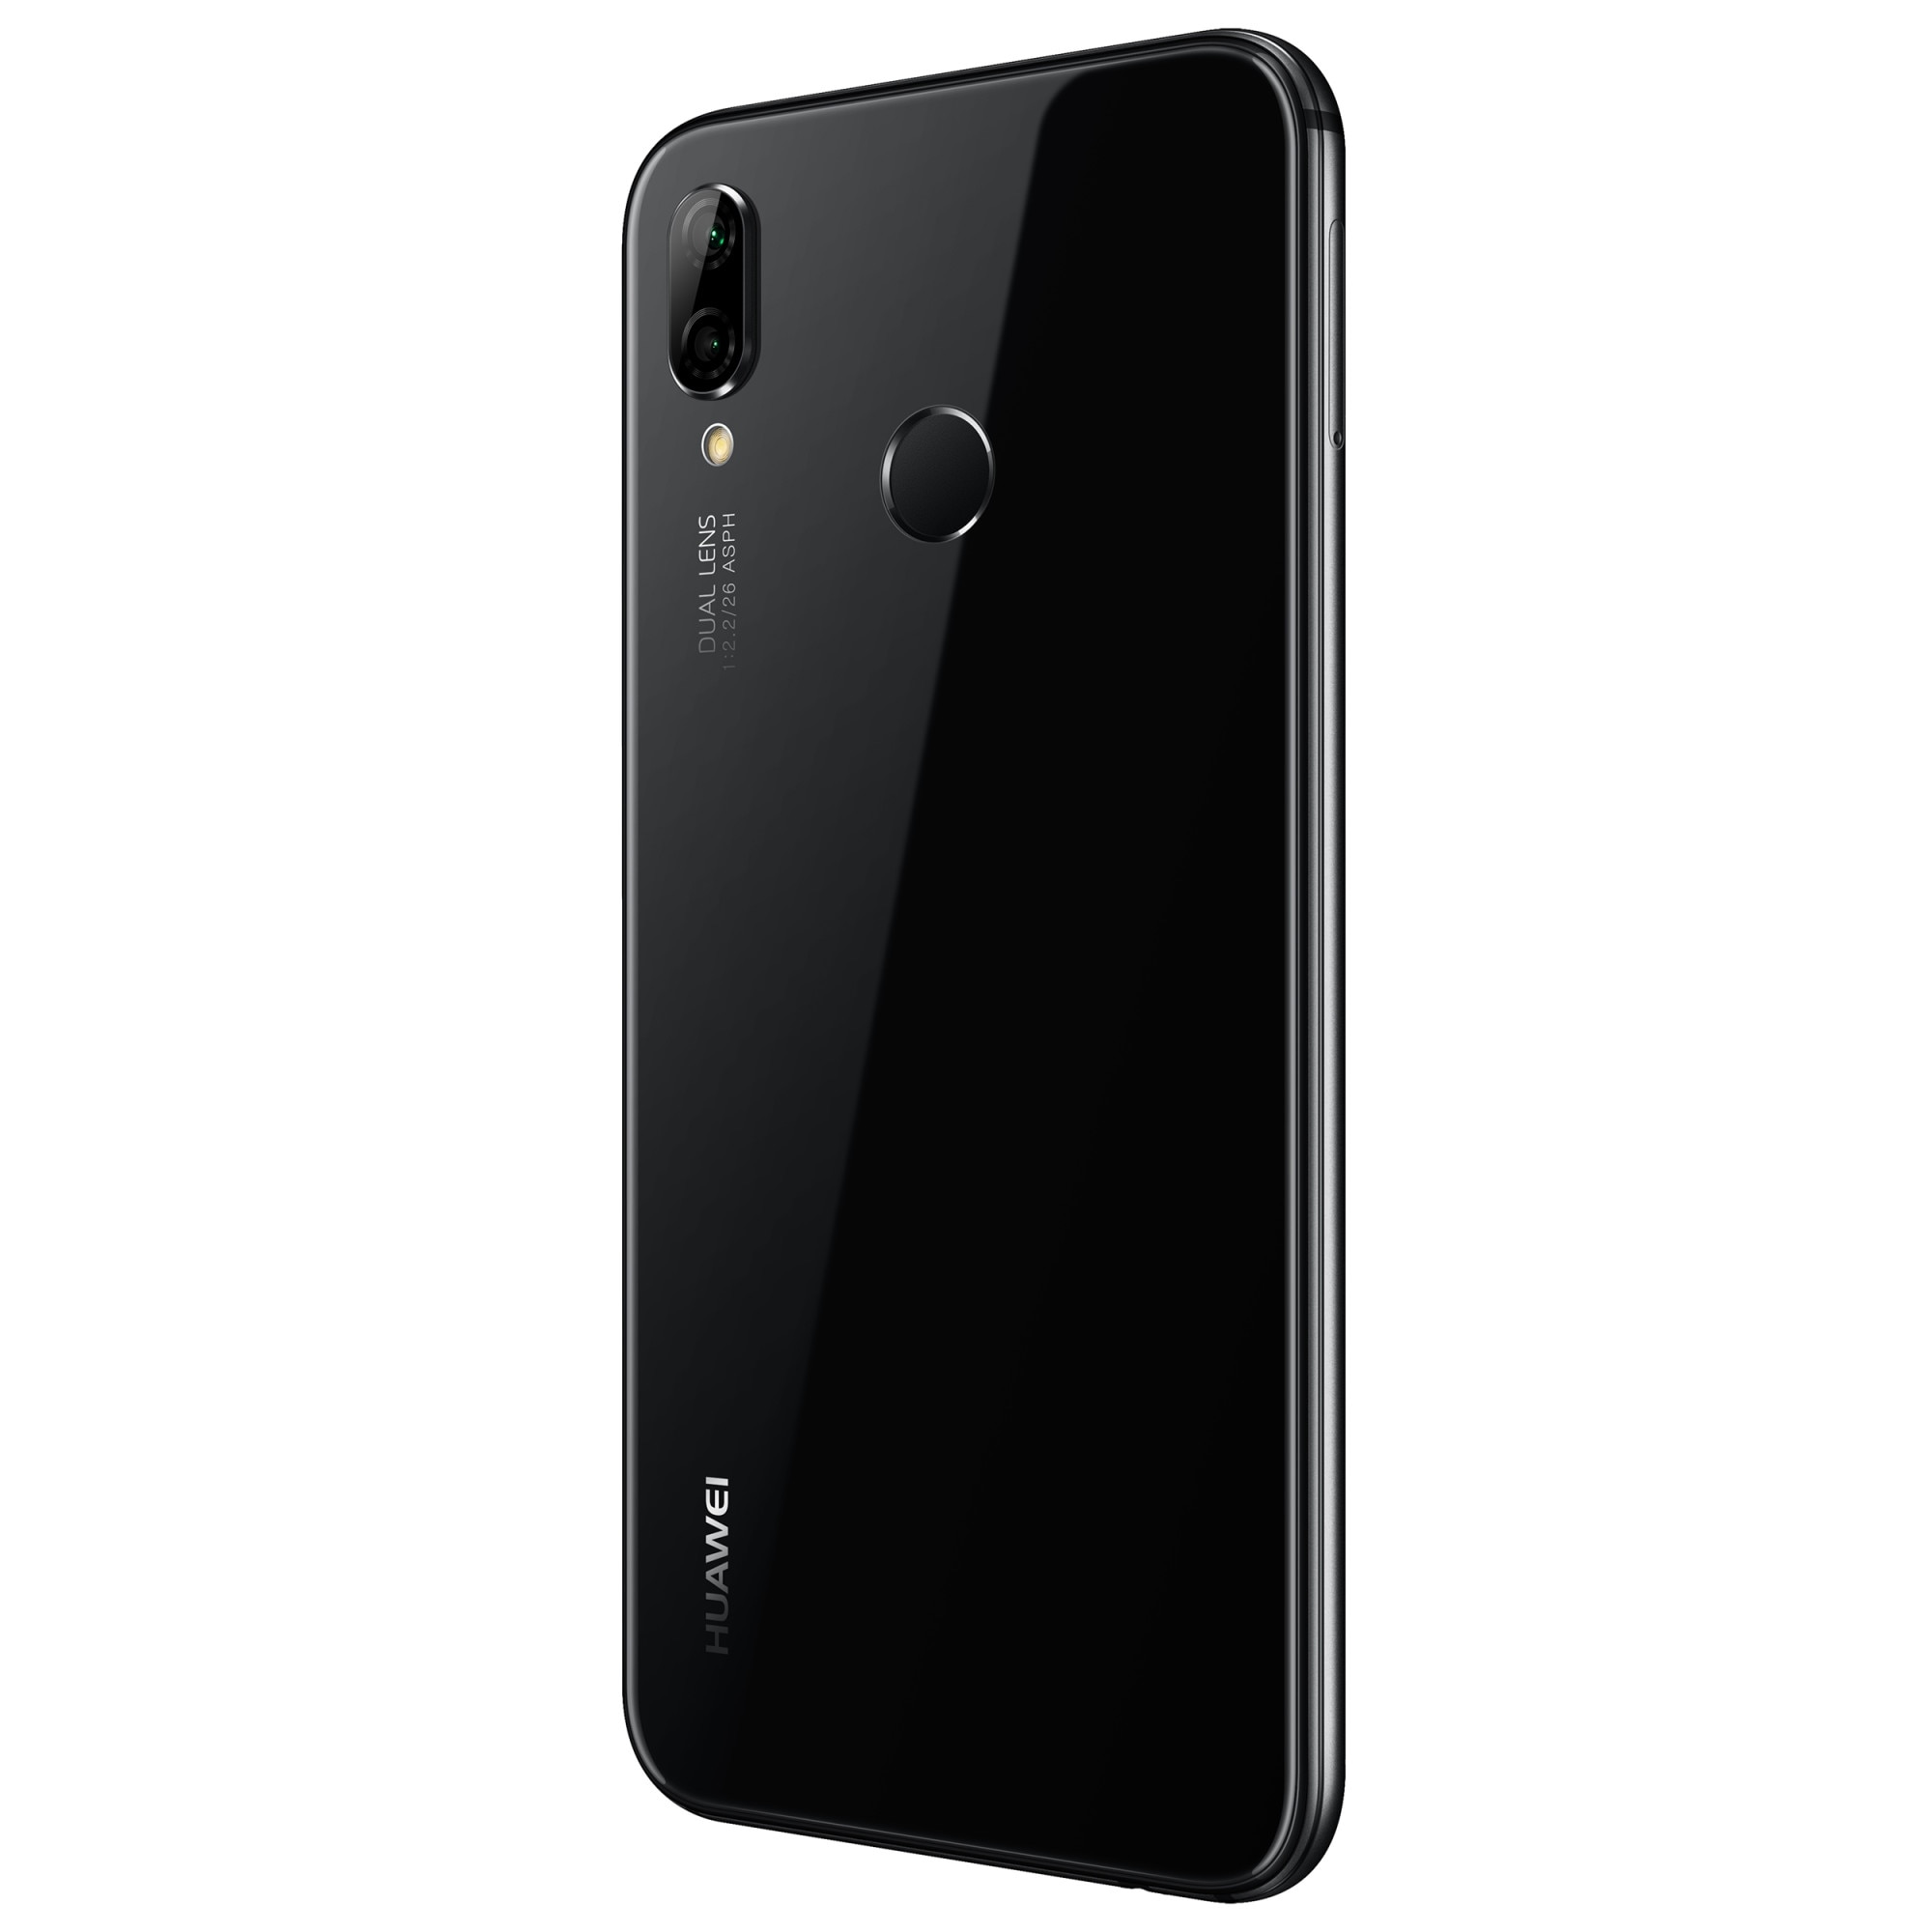 Huawei p20 4. Смартфон Huawei p20 Lite Black. Ane-lx1 Huawei p20 Lite. Смартфон Huawei p20 Lite 4/64 ГБ. Huawei p20 Lite черный.